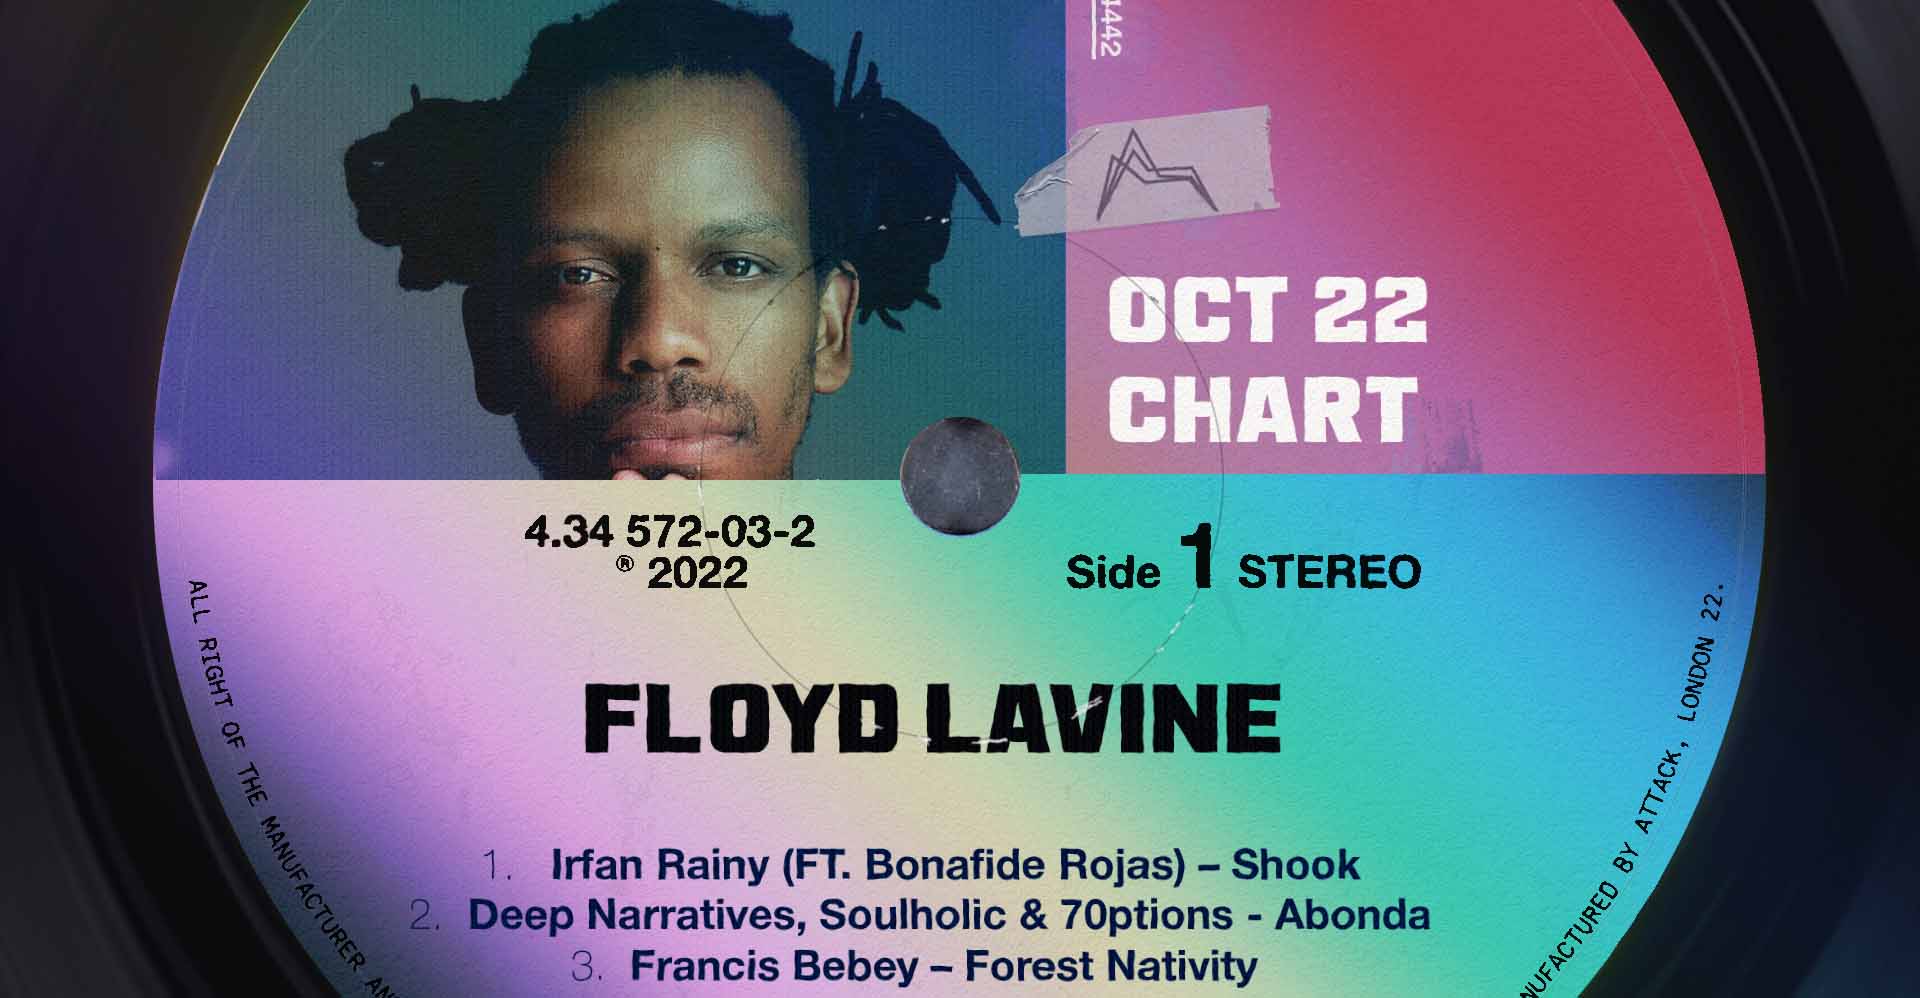 Floyd Lavine Oct 22 Chart